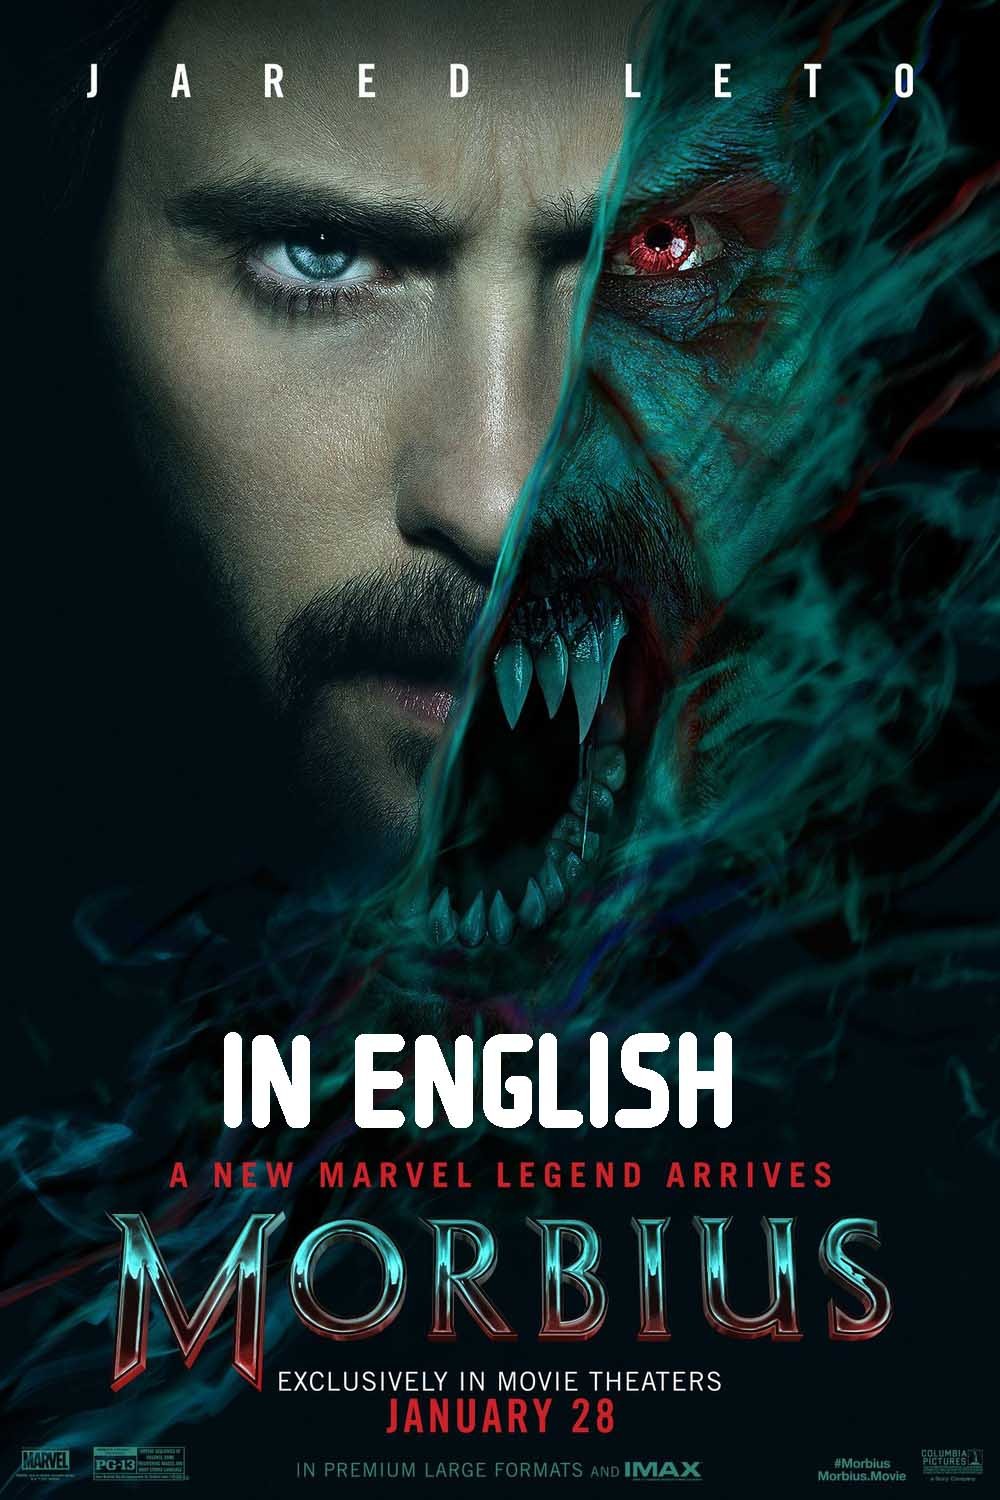 Morbius 2022 Full Movie Download in English 480p HDCAMRip Watch